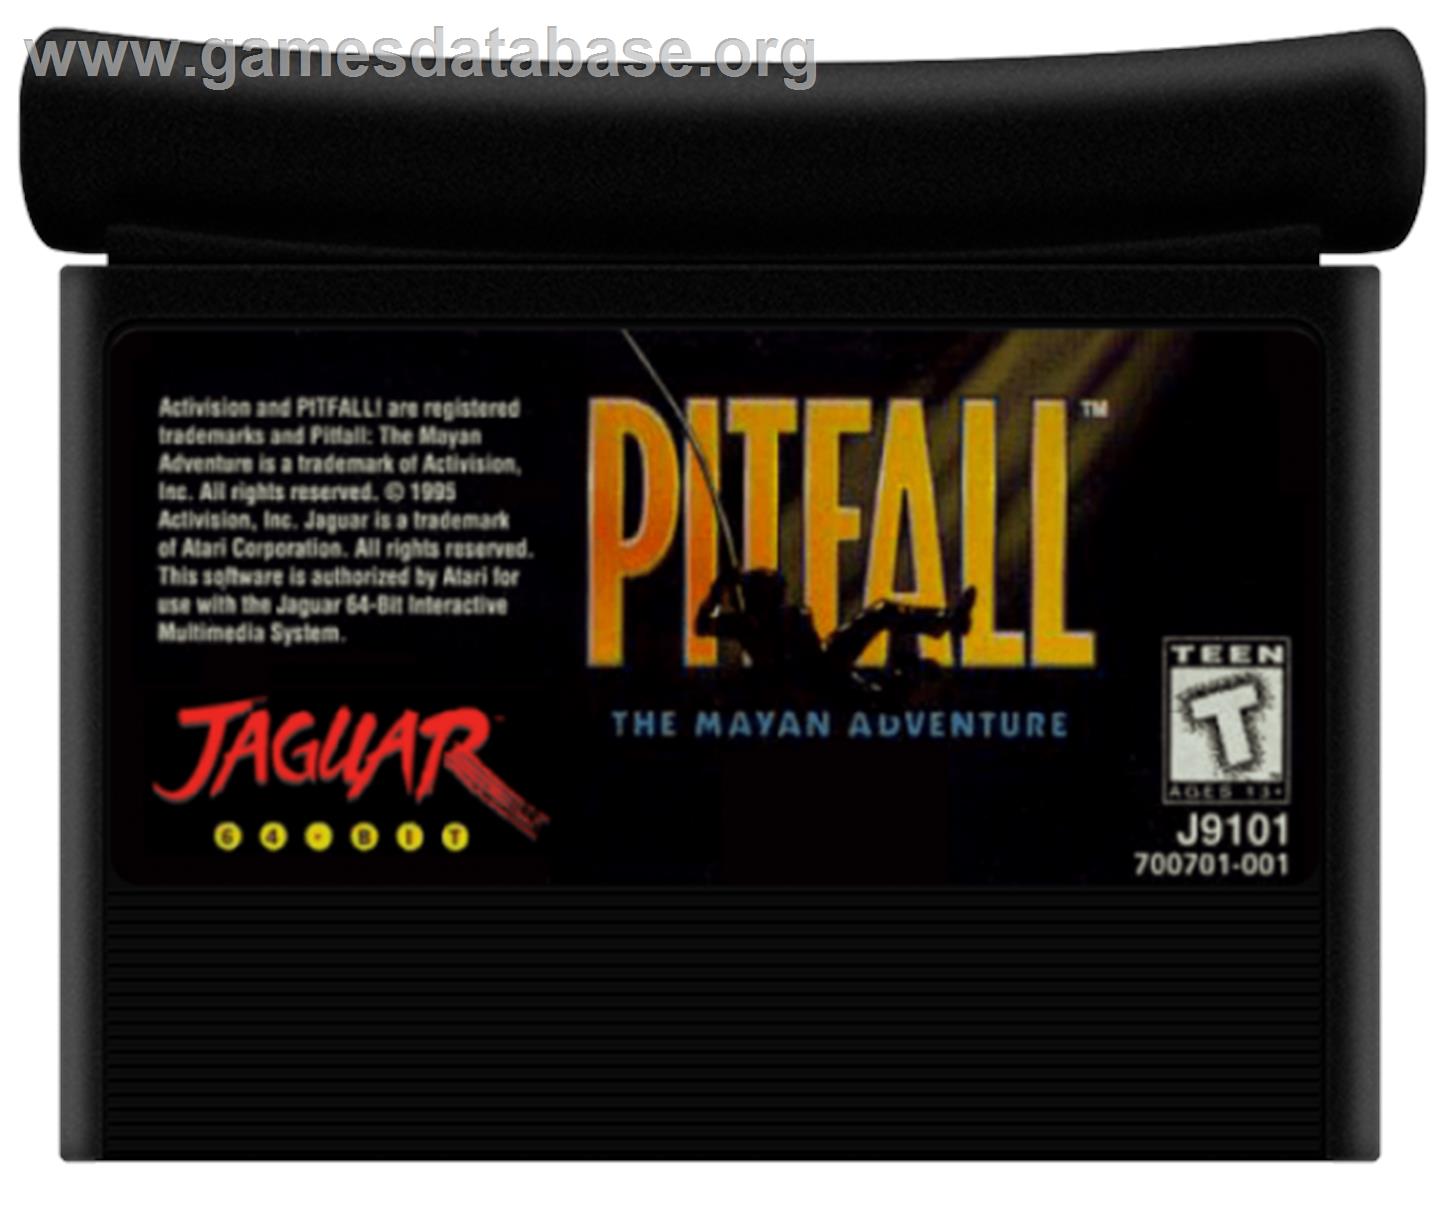 Pitfall: The Mayan Adventure - Atari Jaguar - Artwork - Cartridge